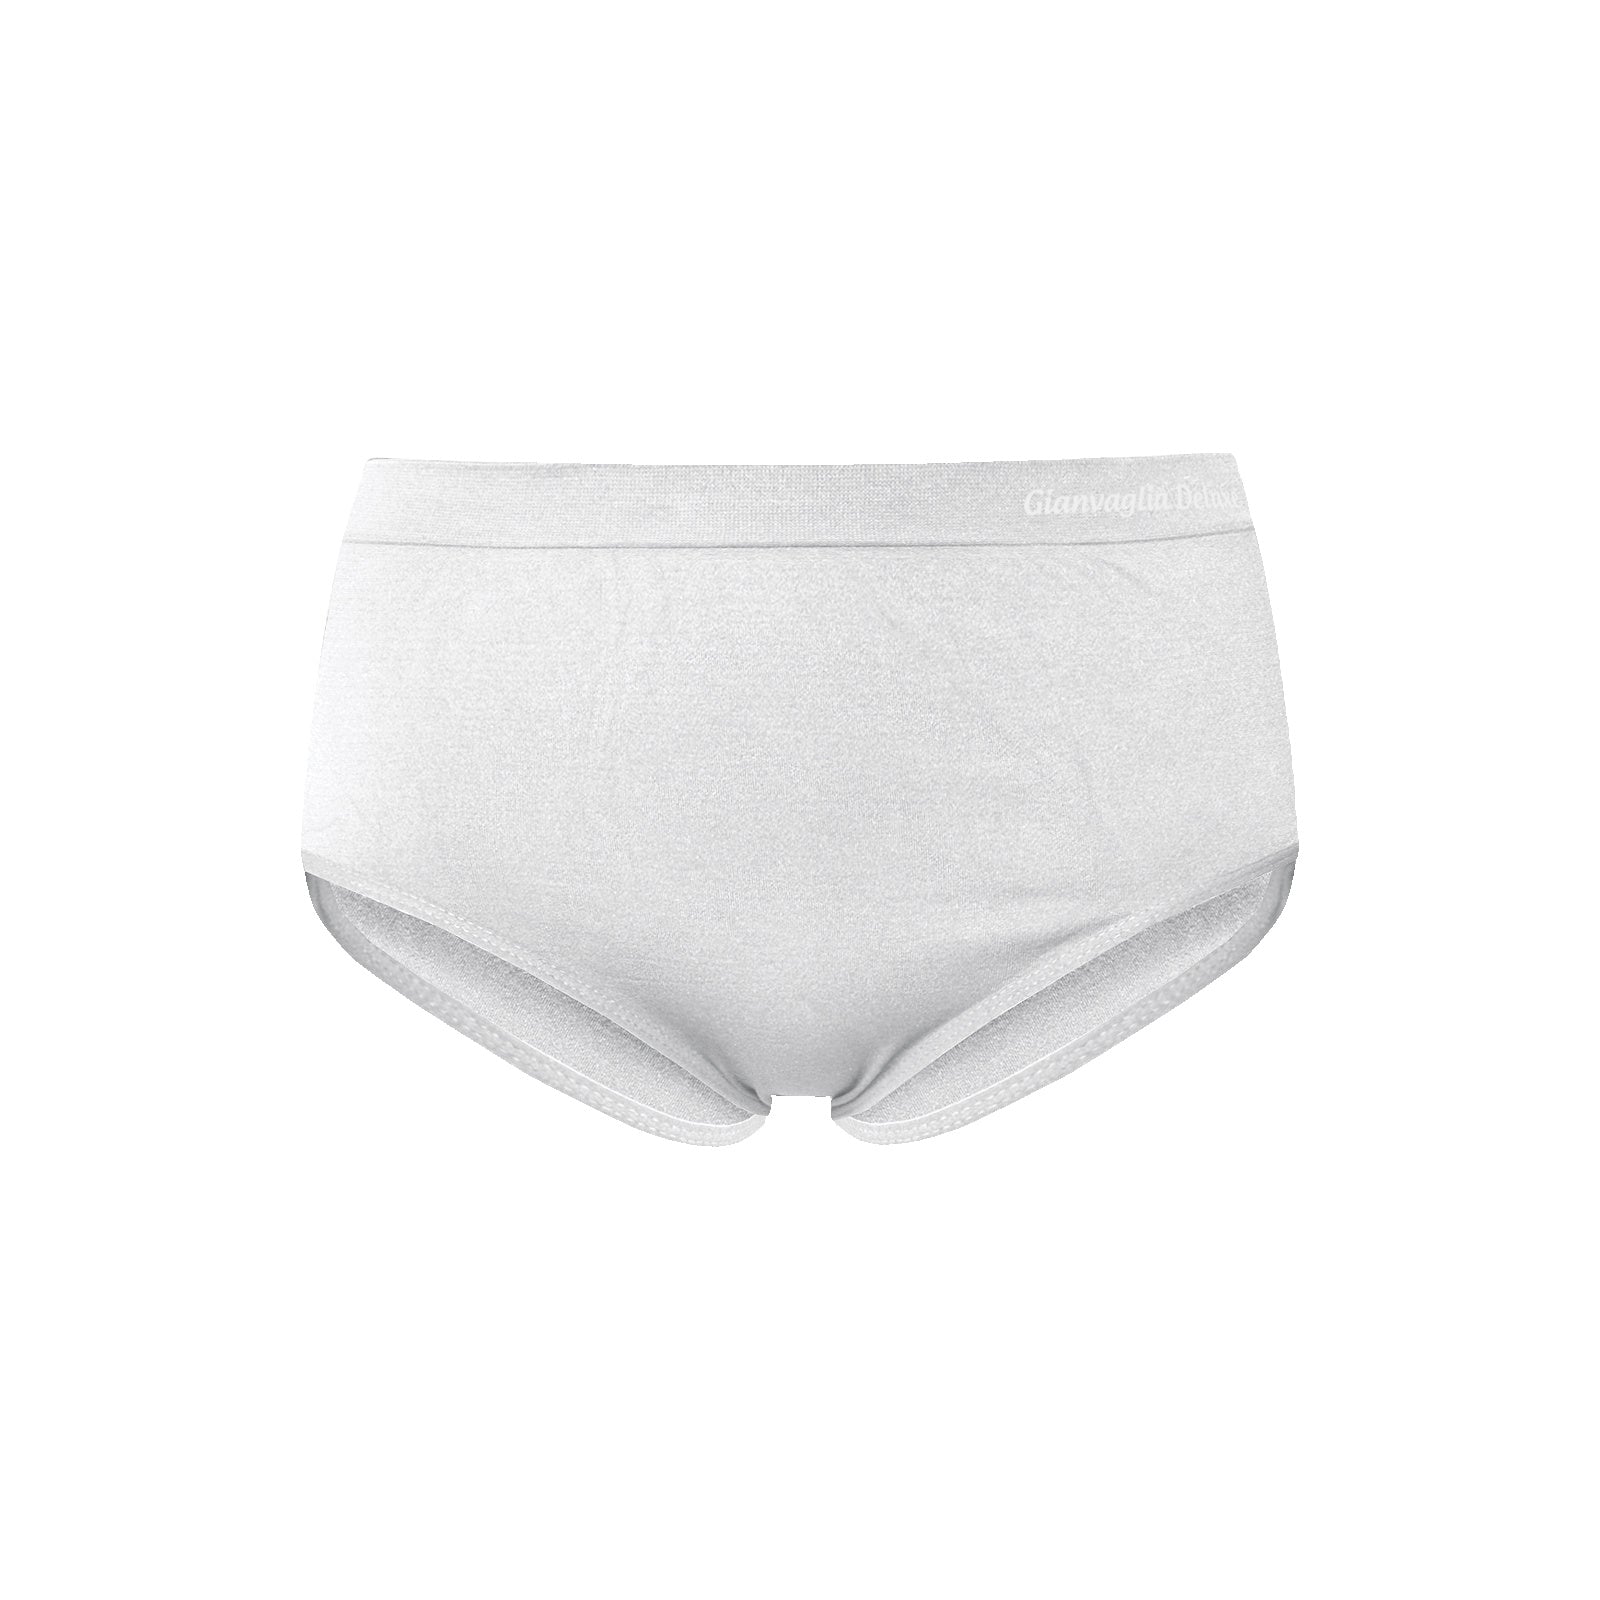 6 pack Gianvaglia Naadloze Dames slips Color - ondergoed